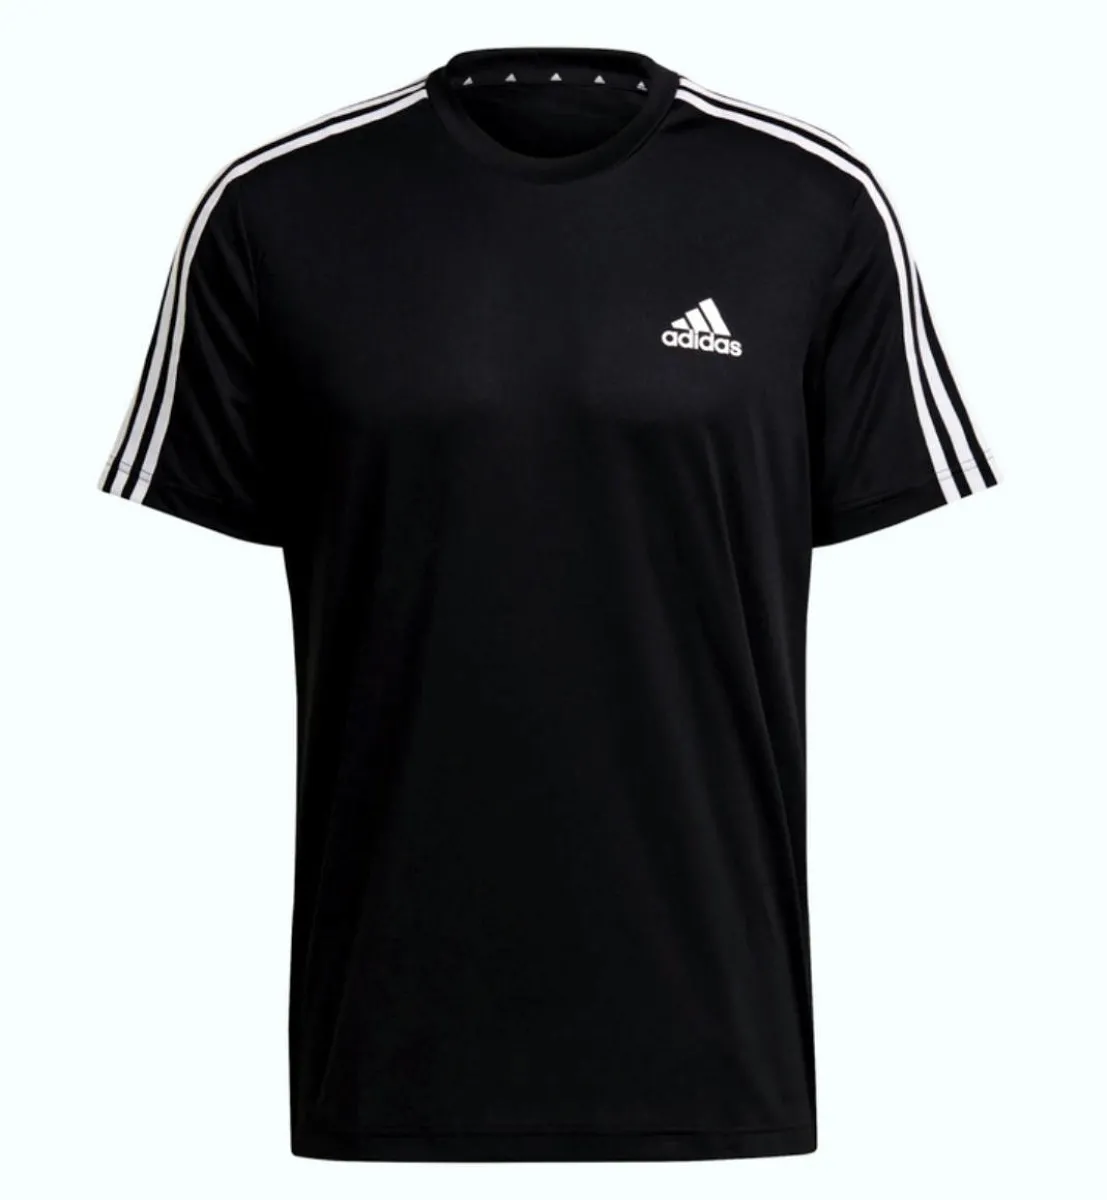 adidas T-Shirt 3S schwarz